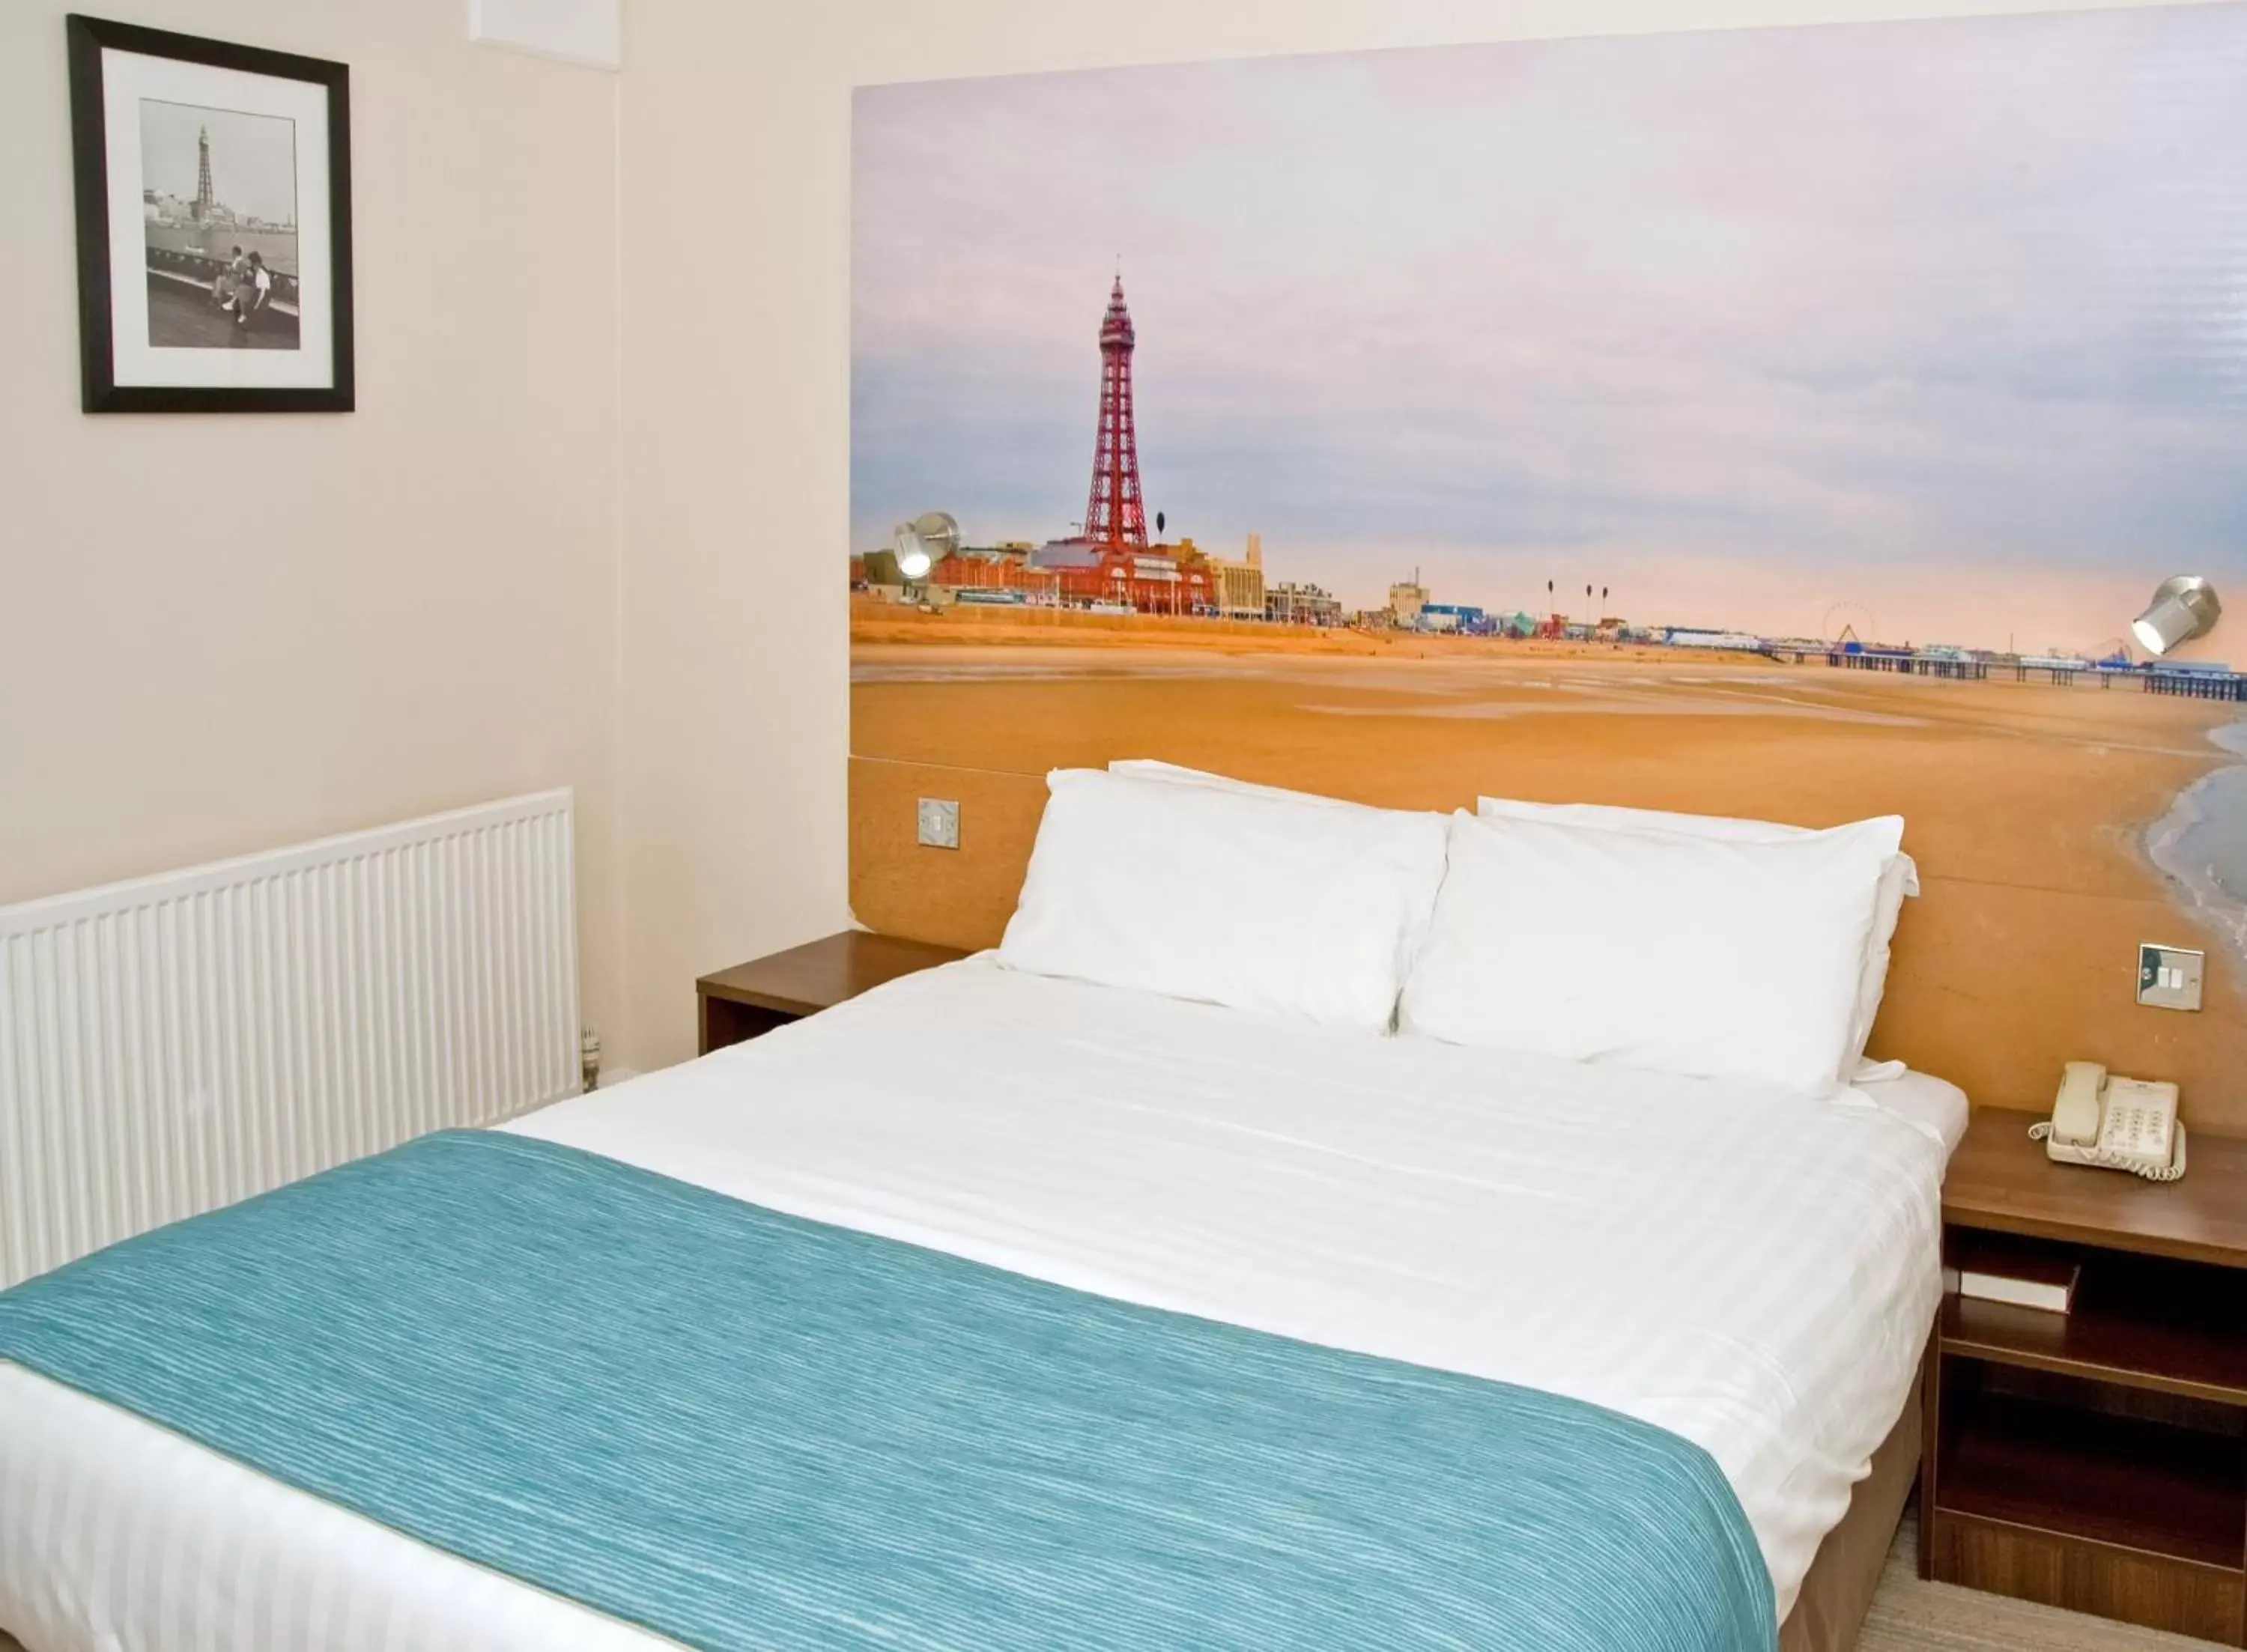 Bed, Room Photo in Best Western Carlton Hotel